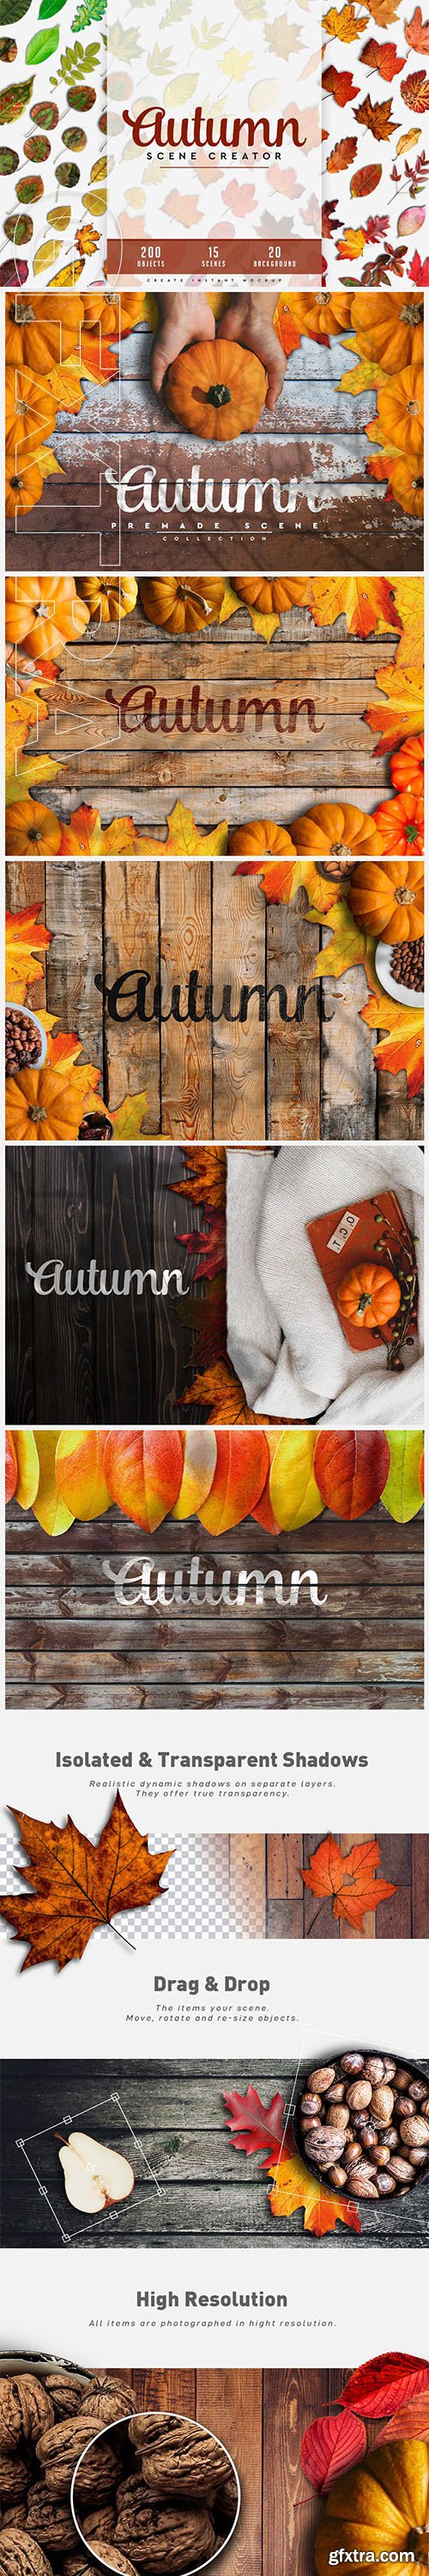 CreativeMarket - Autumn Scene Creator #01 4276129